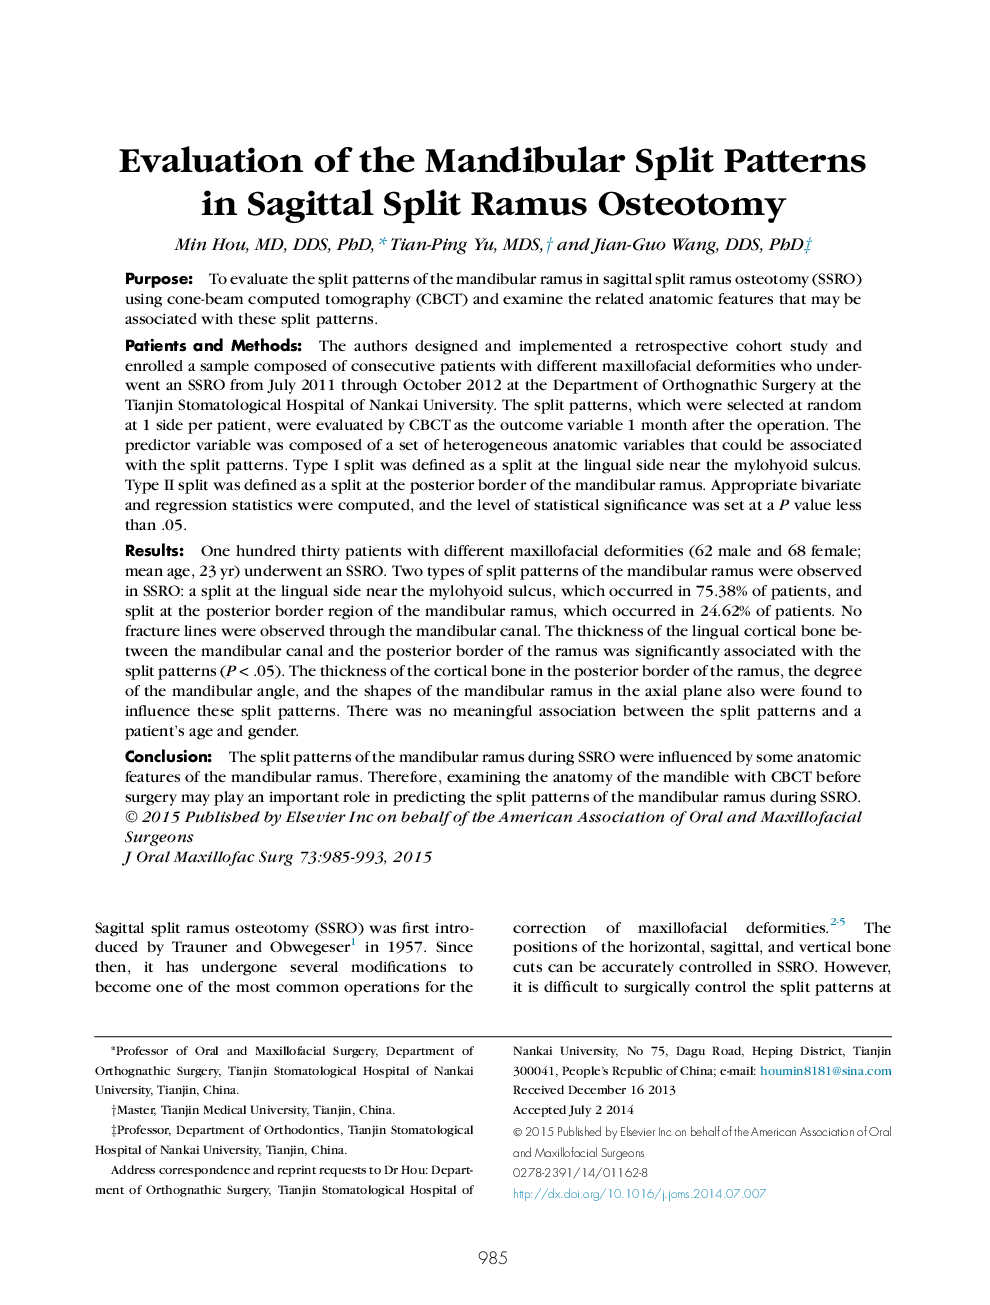 Evaluation of the Mandibular Split Patterns in Sagittal Split Ramus Osteotomy